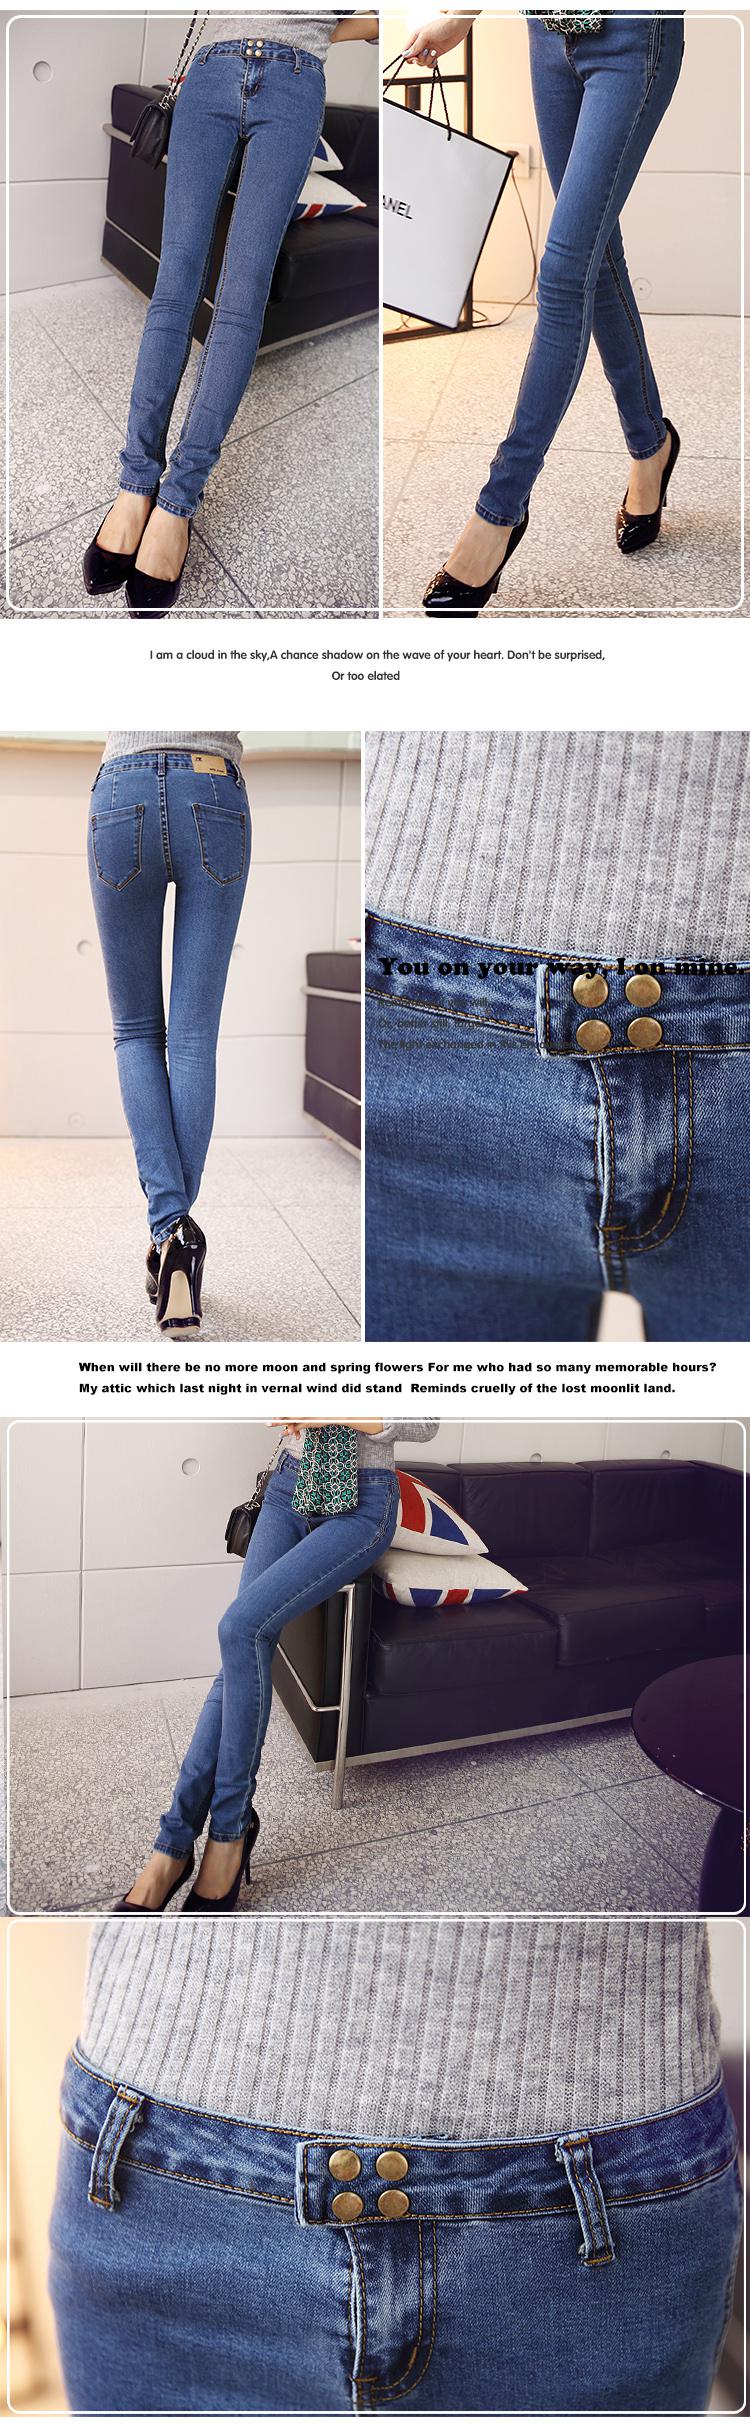 mssefn2014秋冬新款时尚韩版个性修身简单提臀女式牛仔长裤A007G01